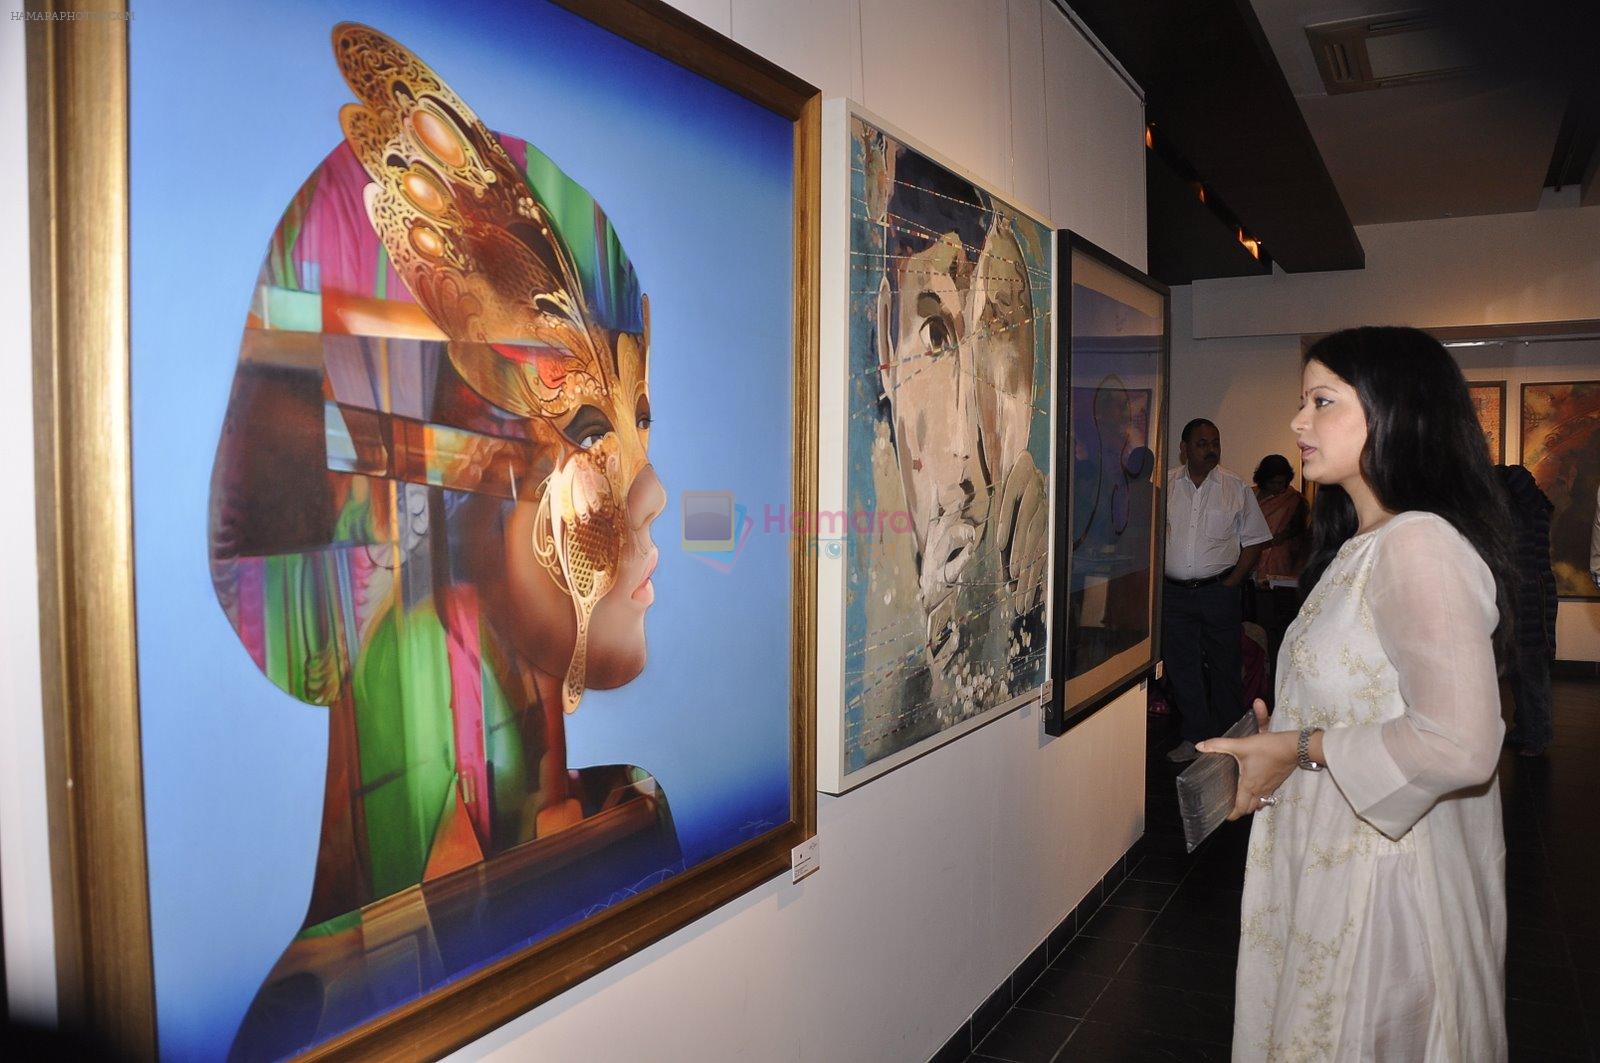 Arzoo Govitrikar at Khushii art event in Tao Art Gallery on 22nd Nov 2014